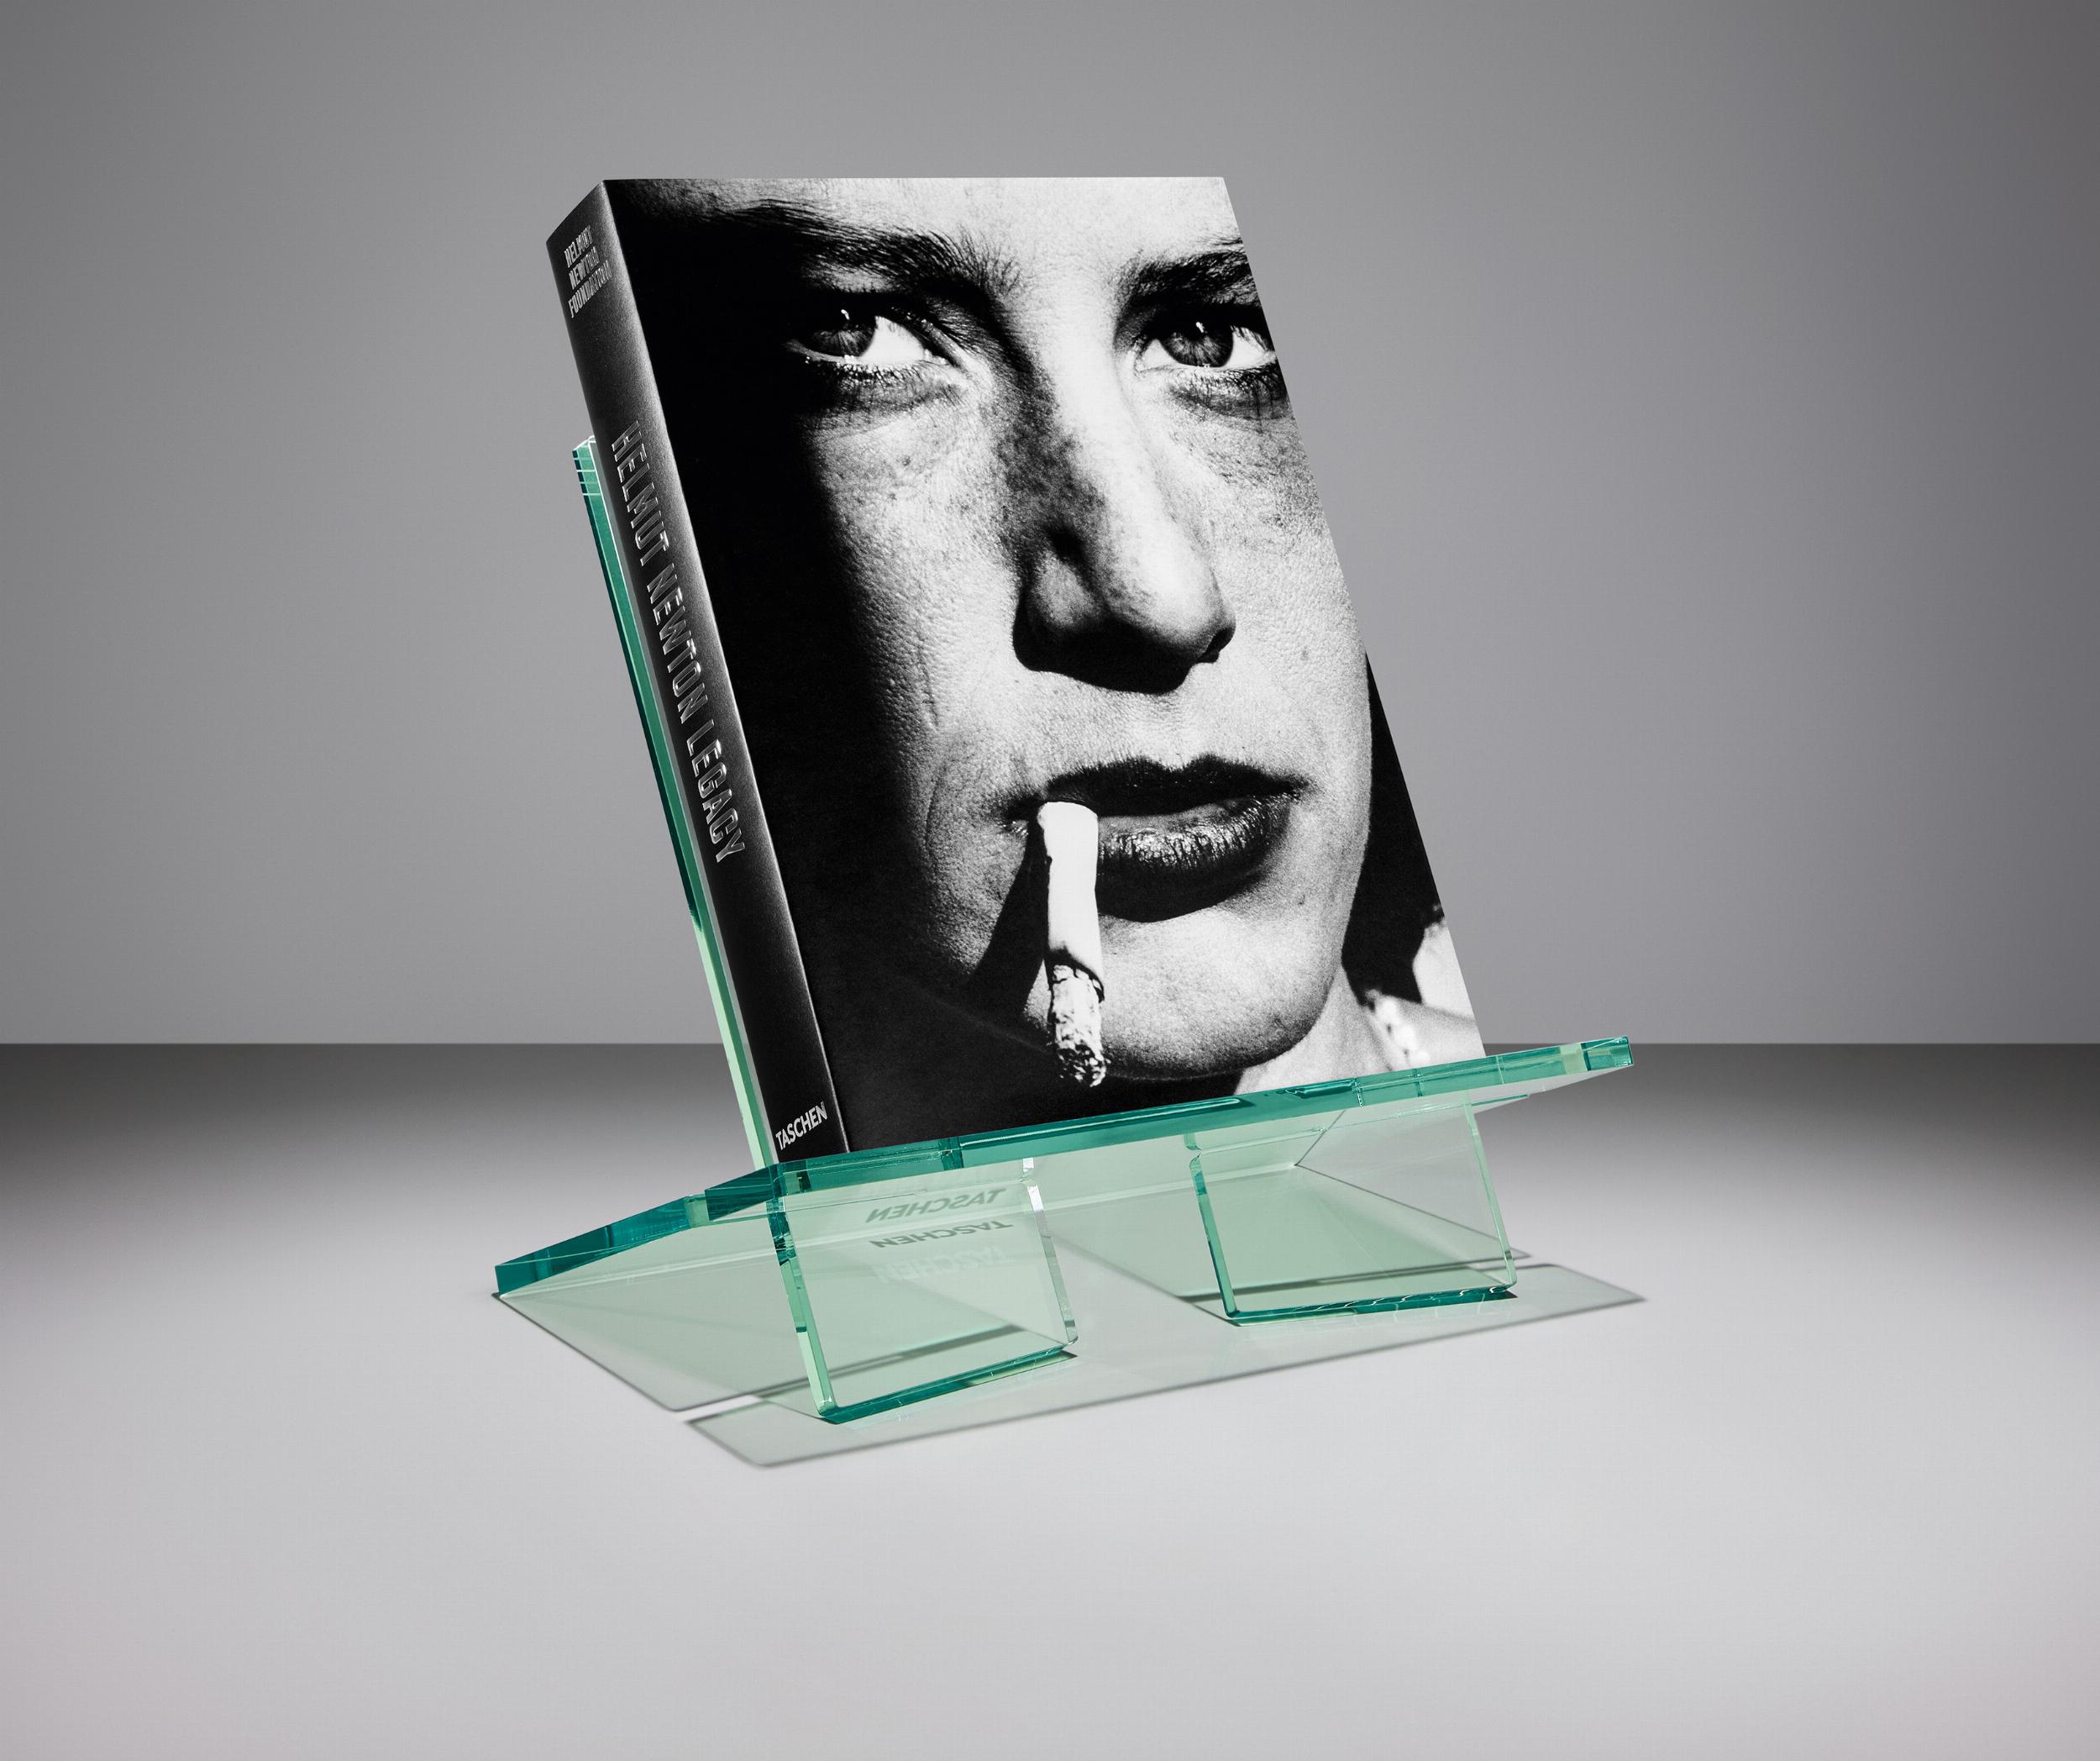 Taschen Bookstand Display Crystal Green, Size L